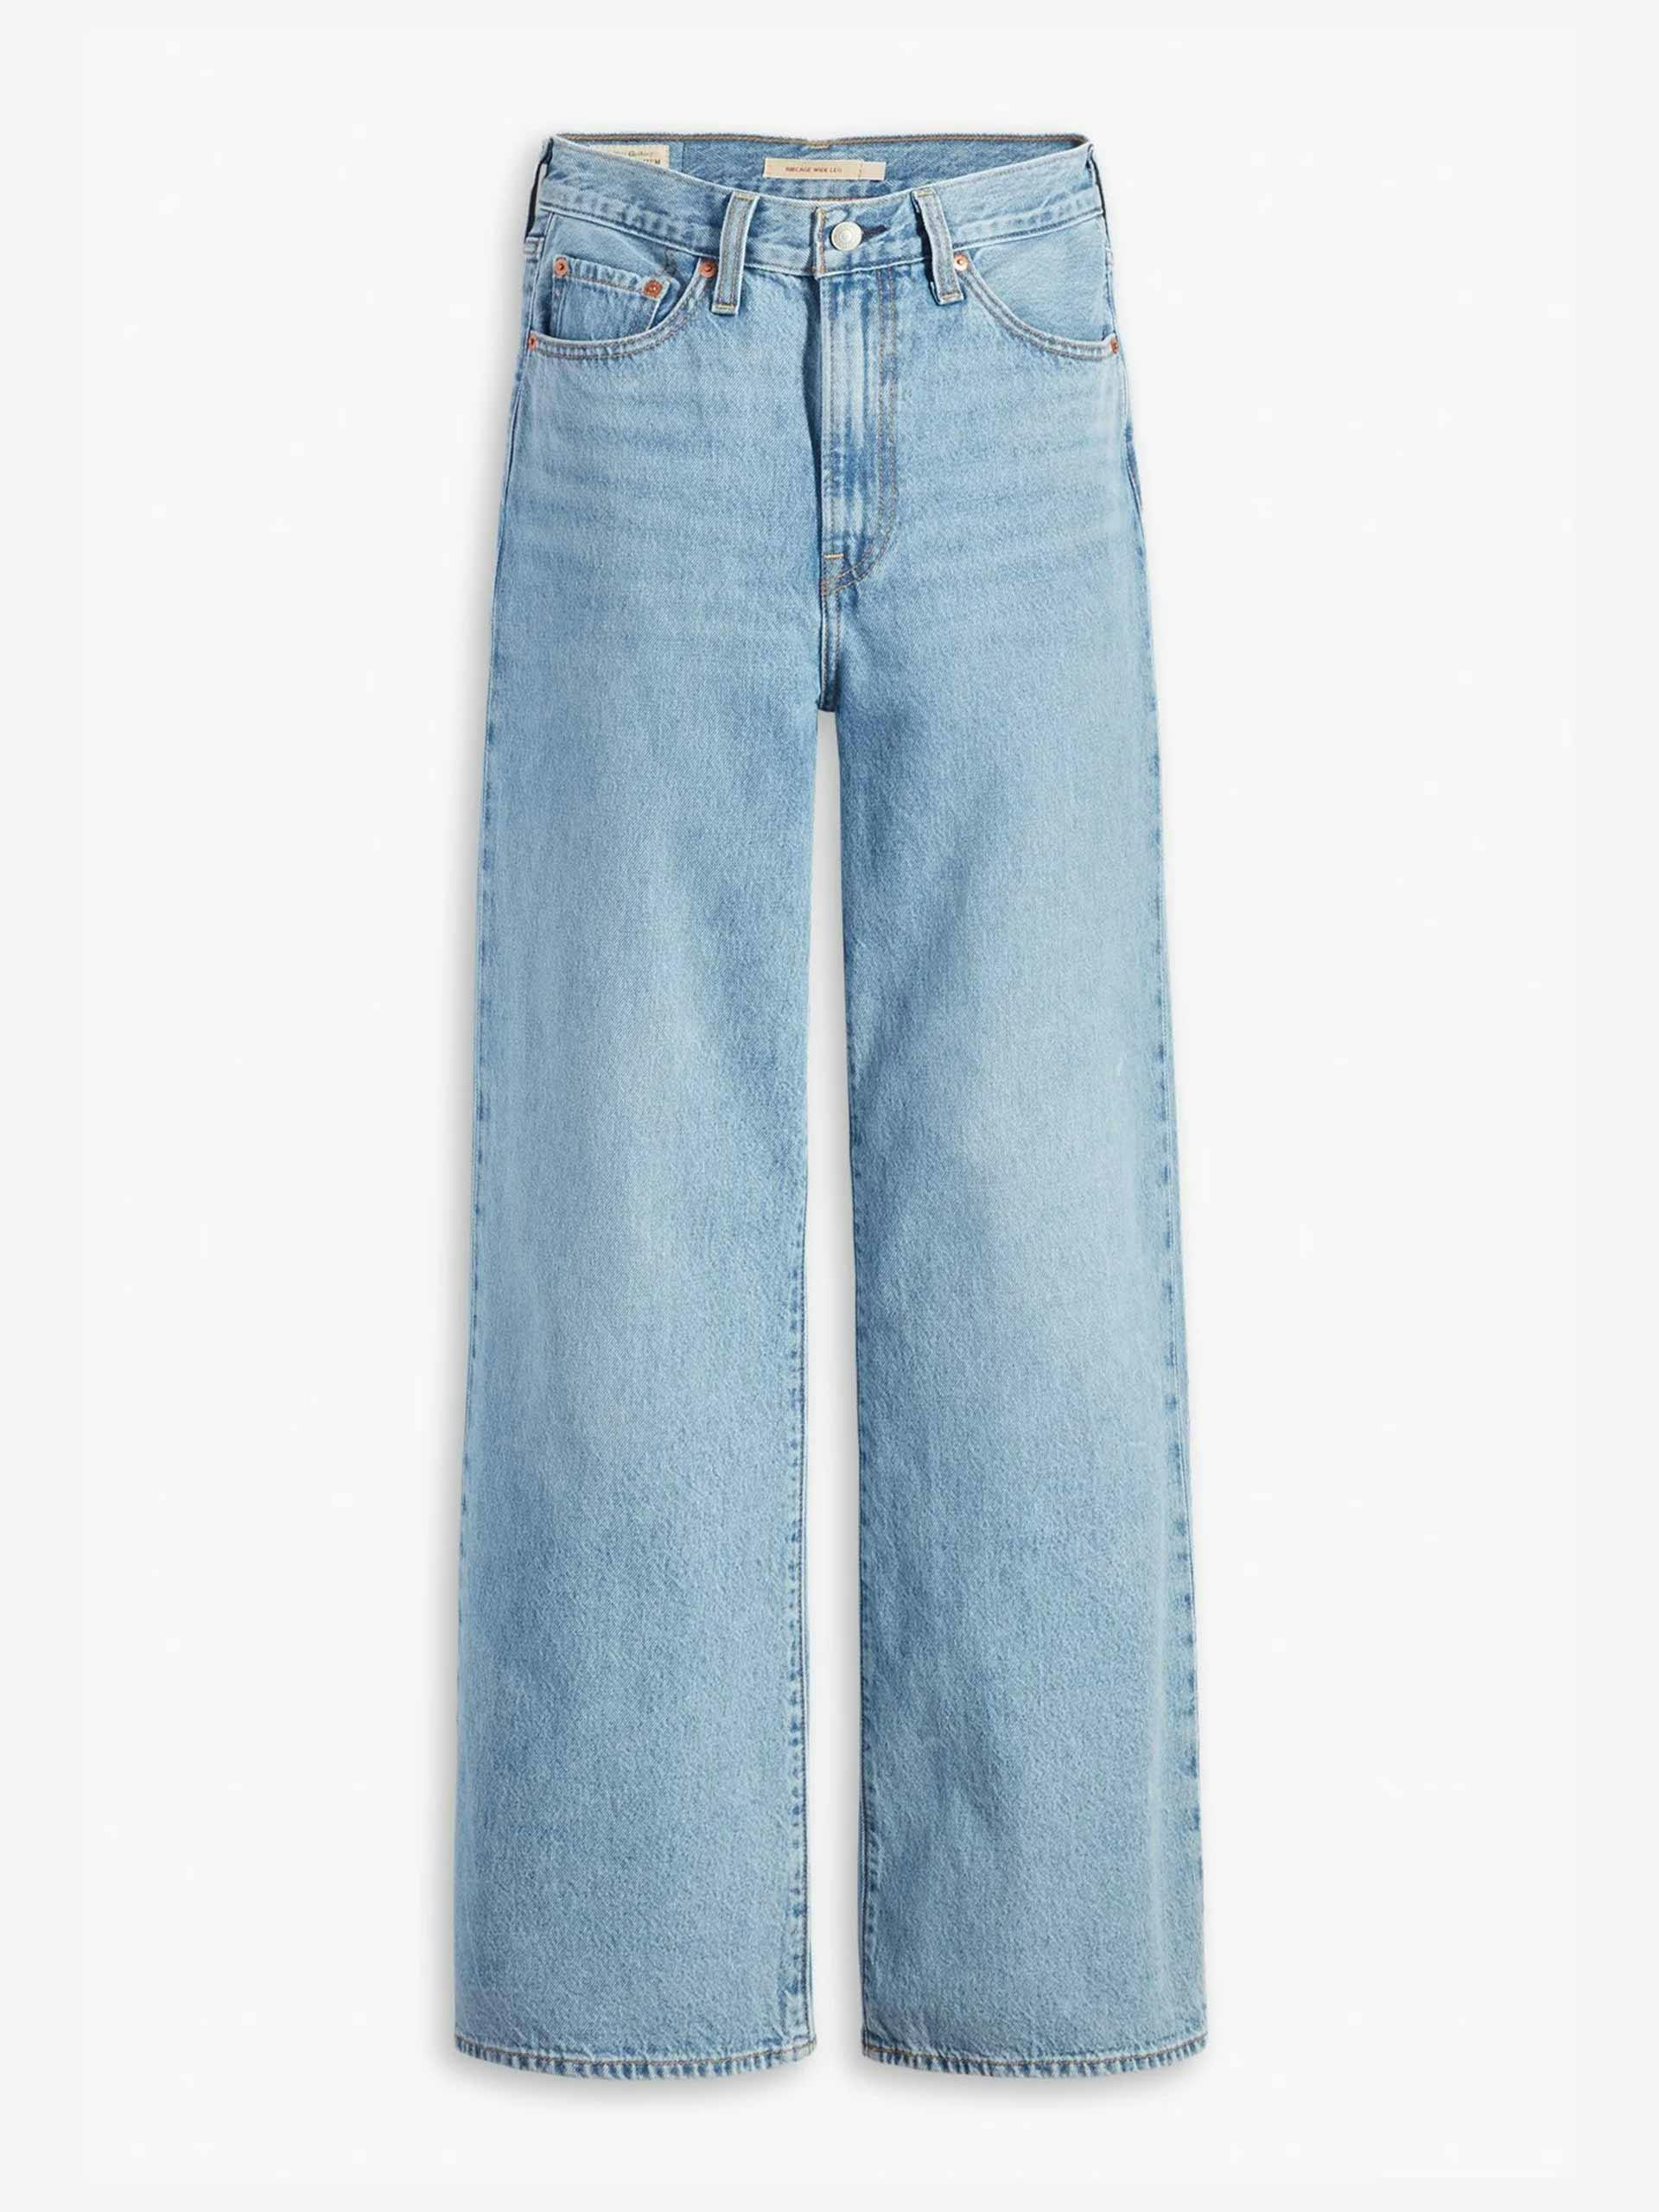 Ribcage wide leg jeans